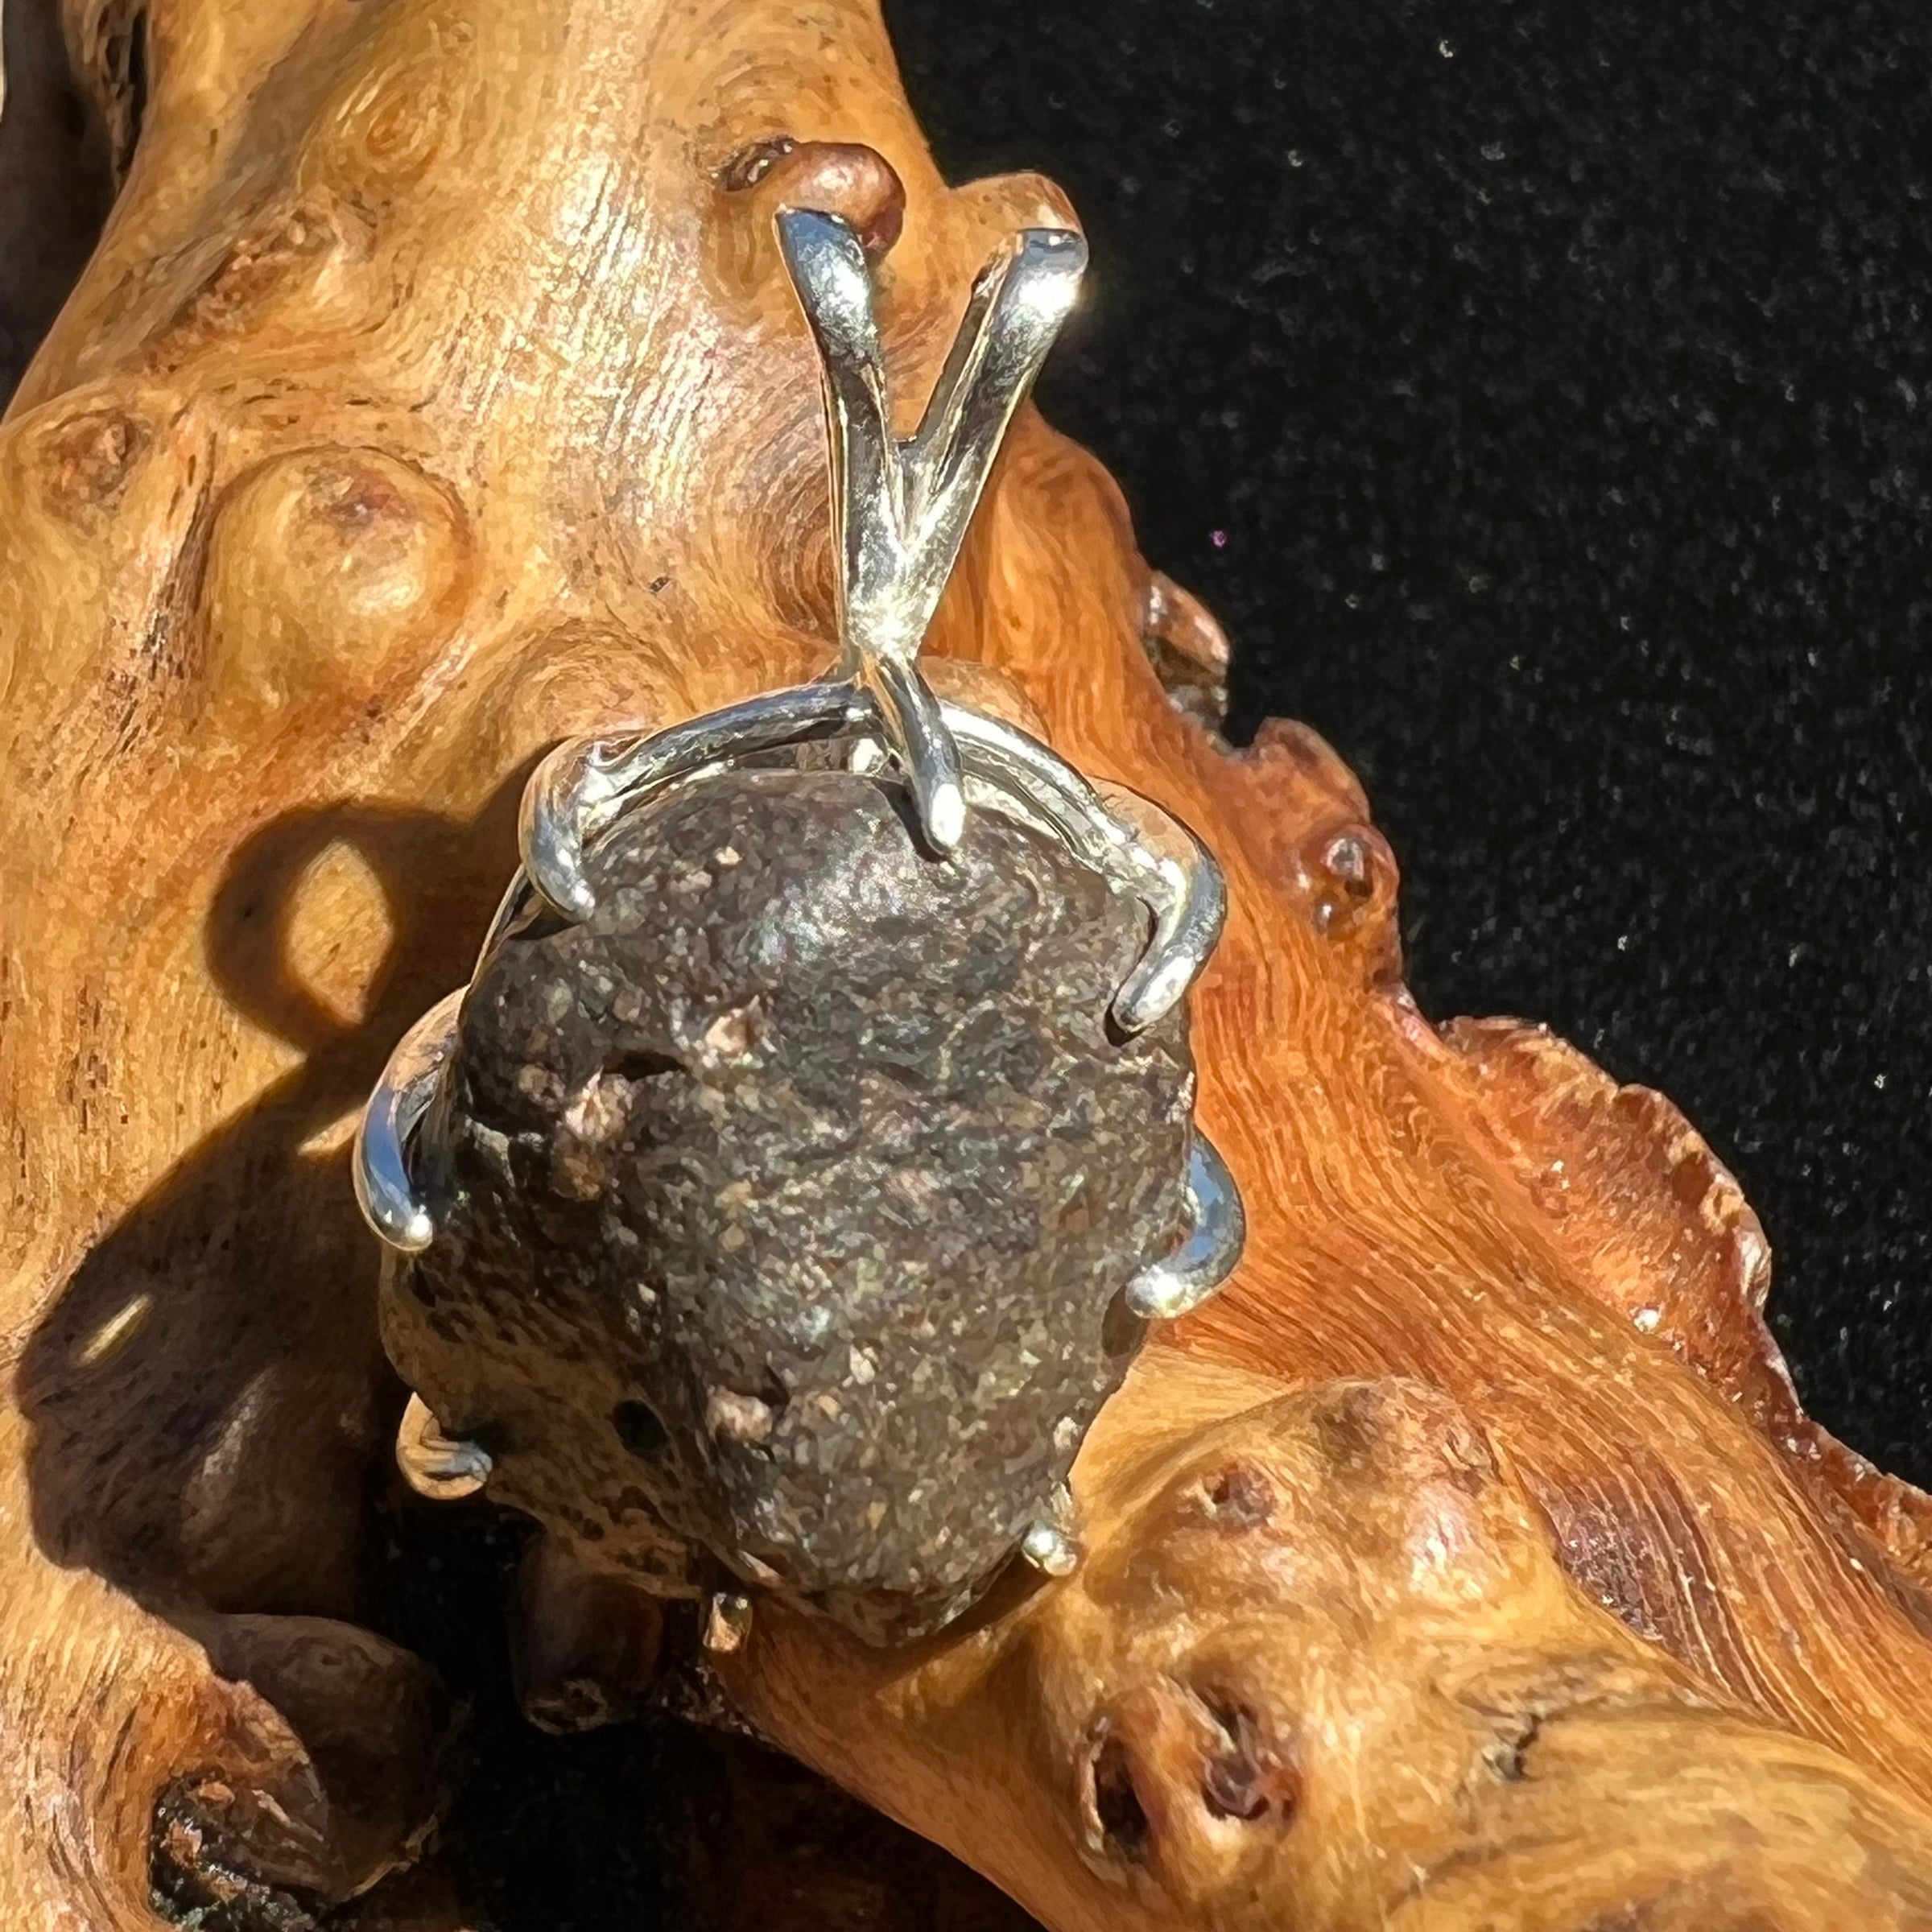 NWA 869 Meteorite Pendant Sterling Silver NWA869-P1-Moldavite Life